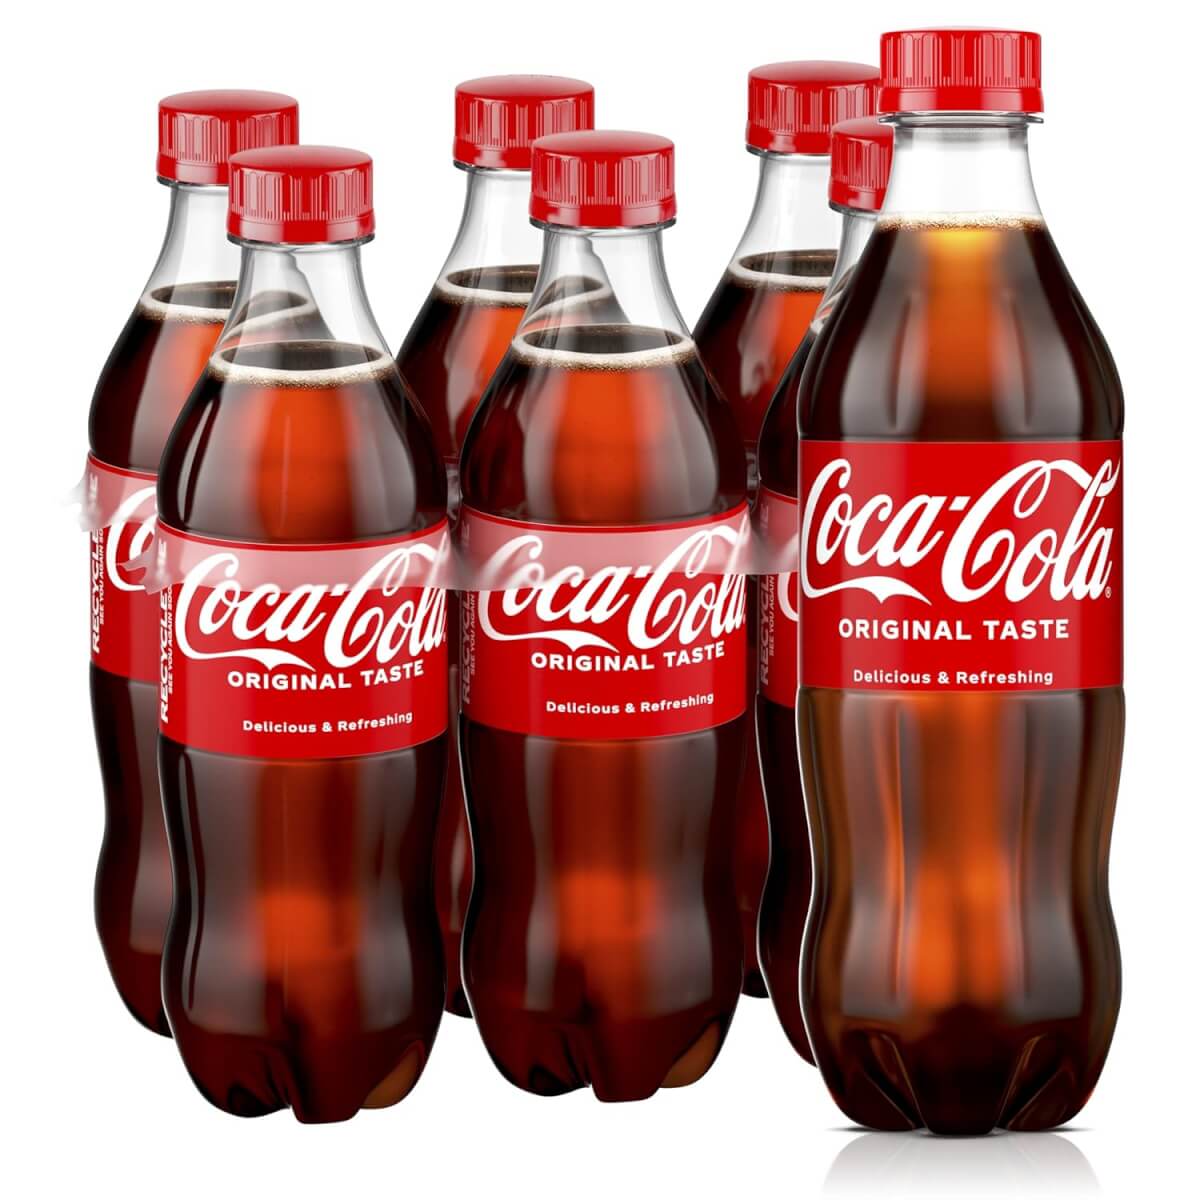 Coca-Cola bottles 